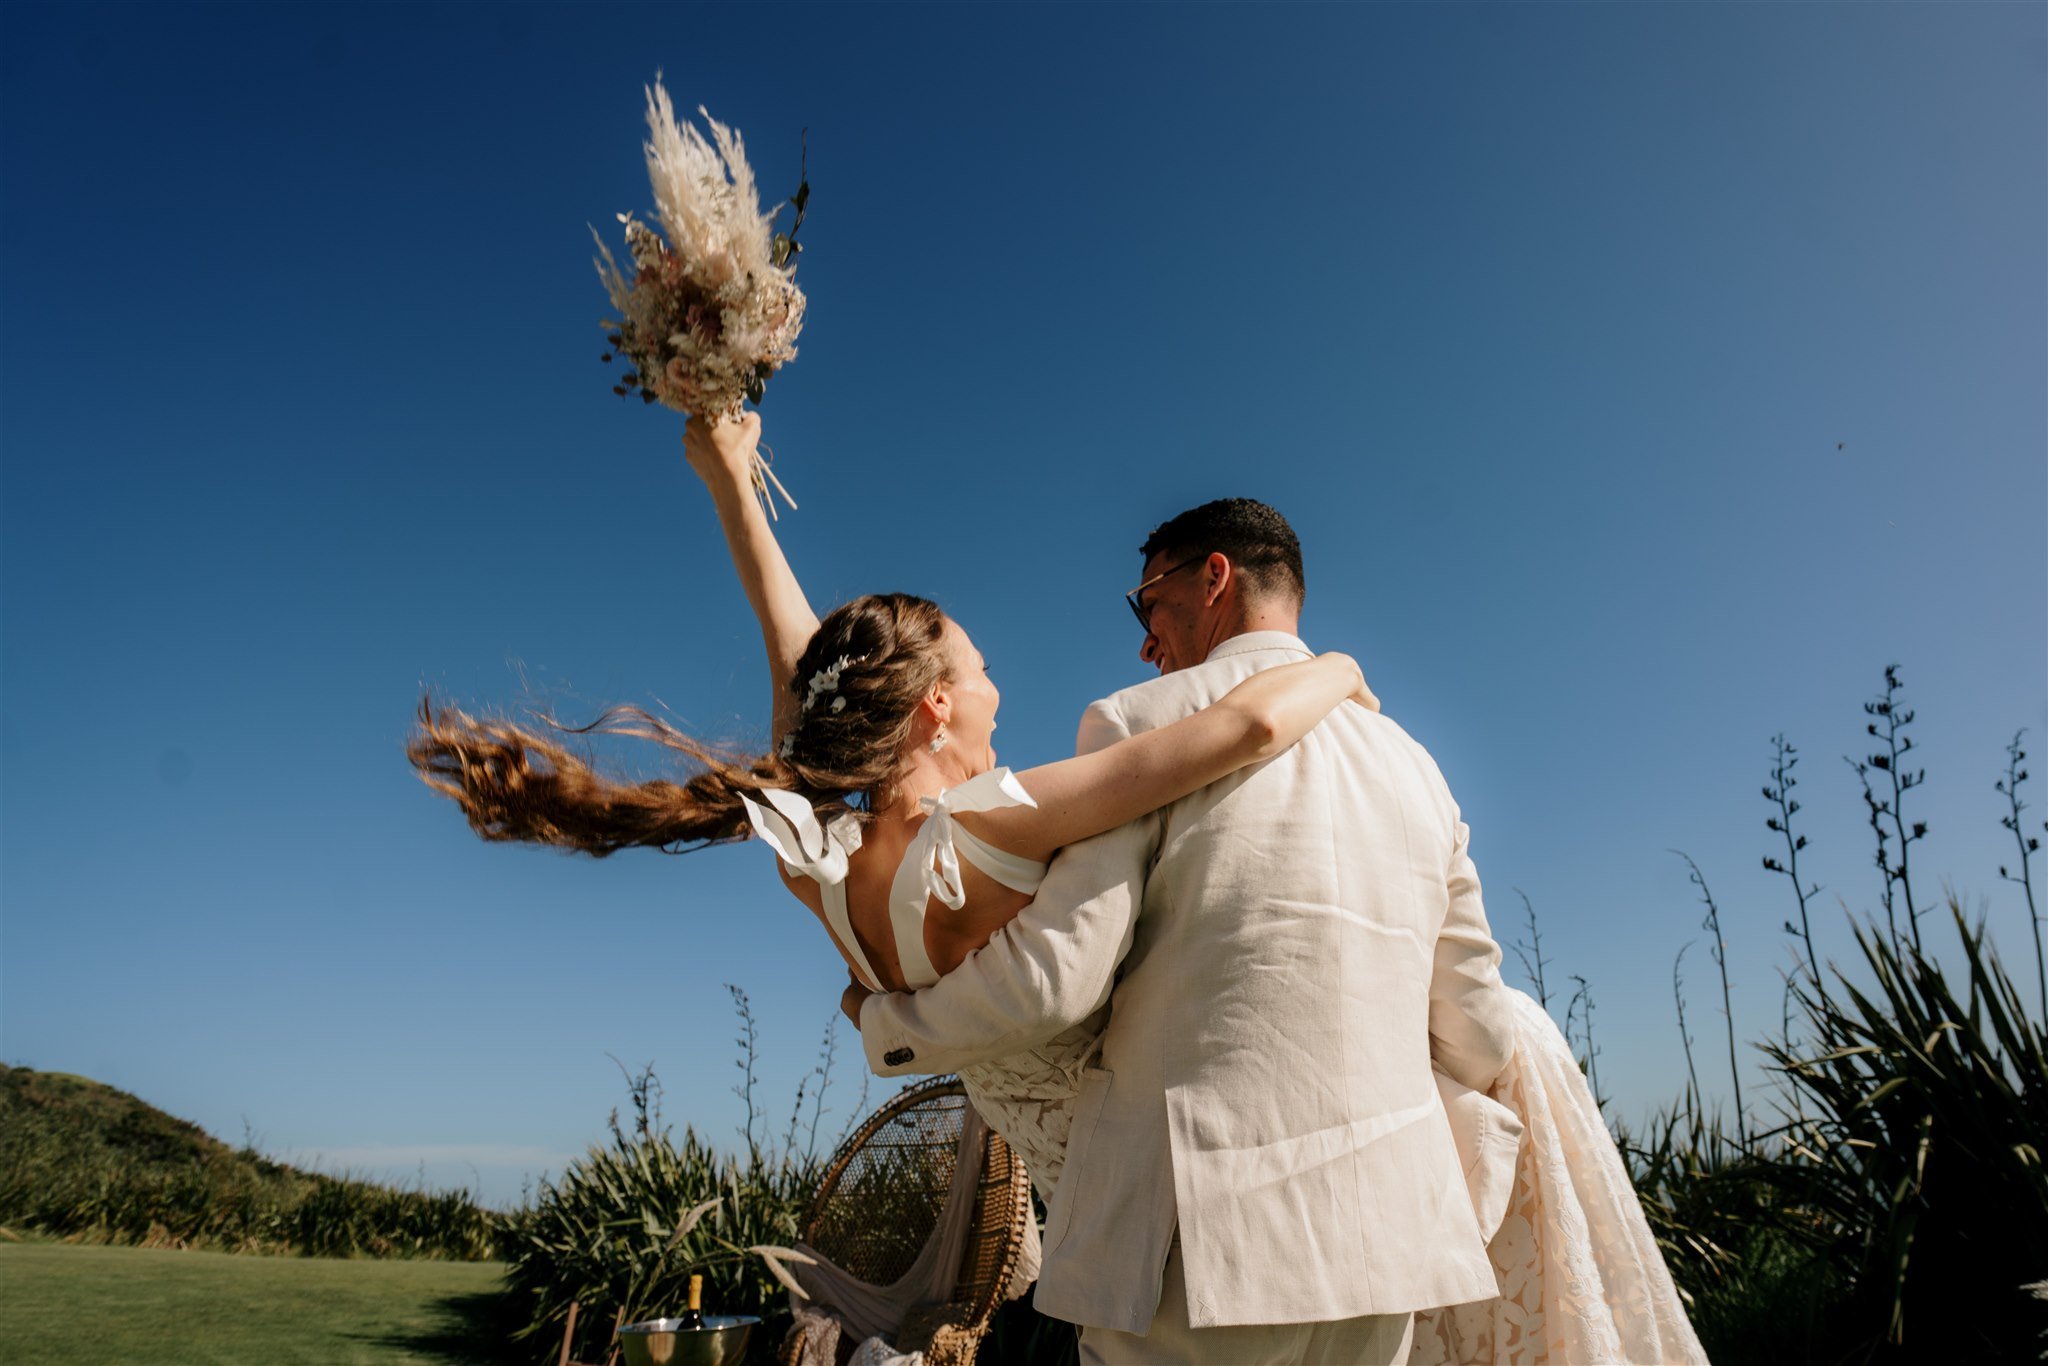 castaways-NZ-new-zealand-auckland-wedding-photographer-photography-videography-film-dear-white-productions-best-venue-waiuku-engagement-elopement-style-beach-intimate (148).jpg